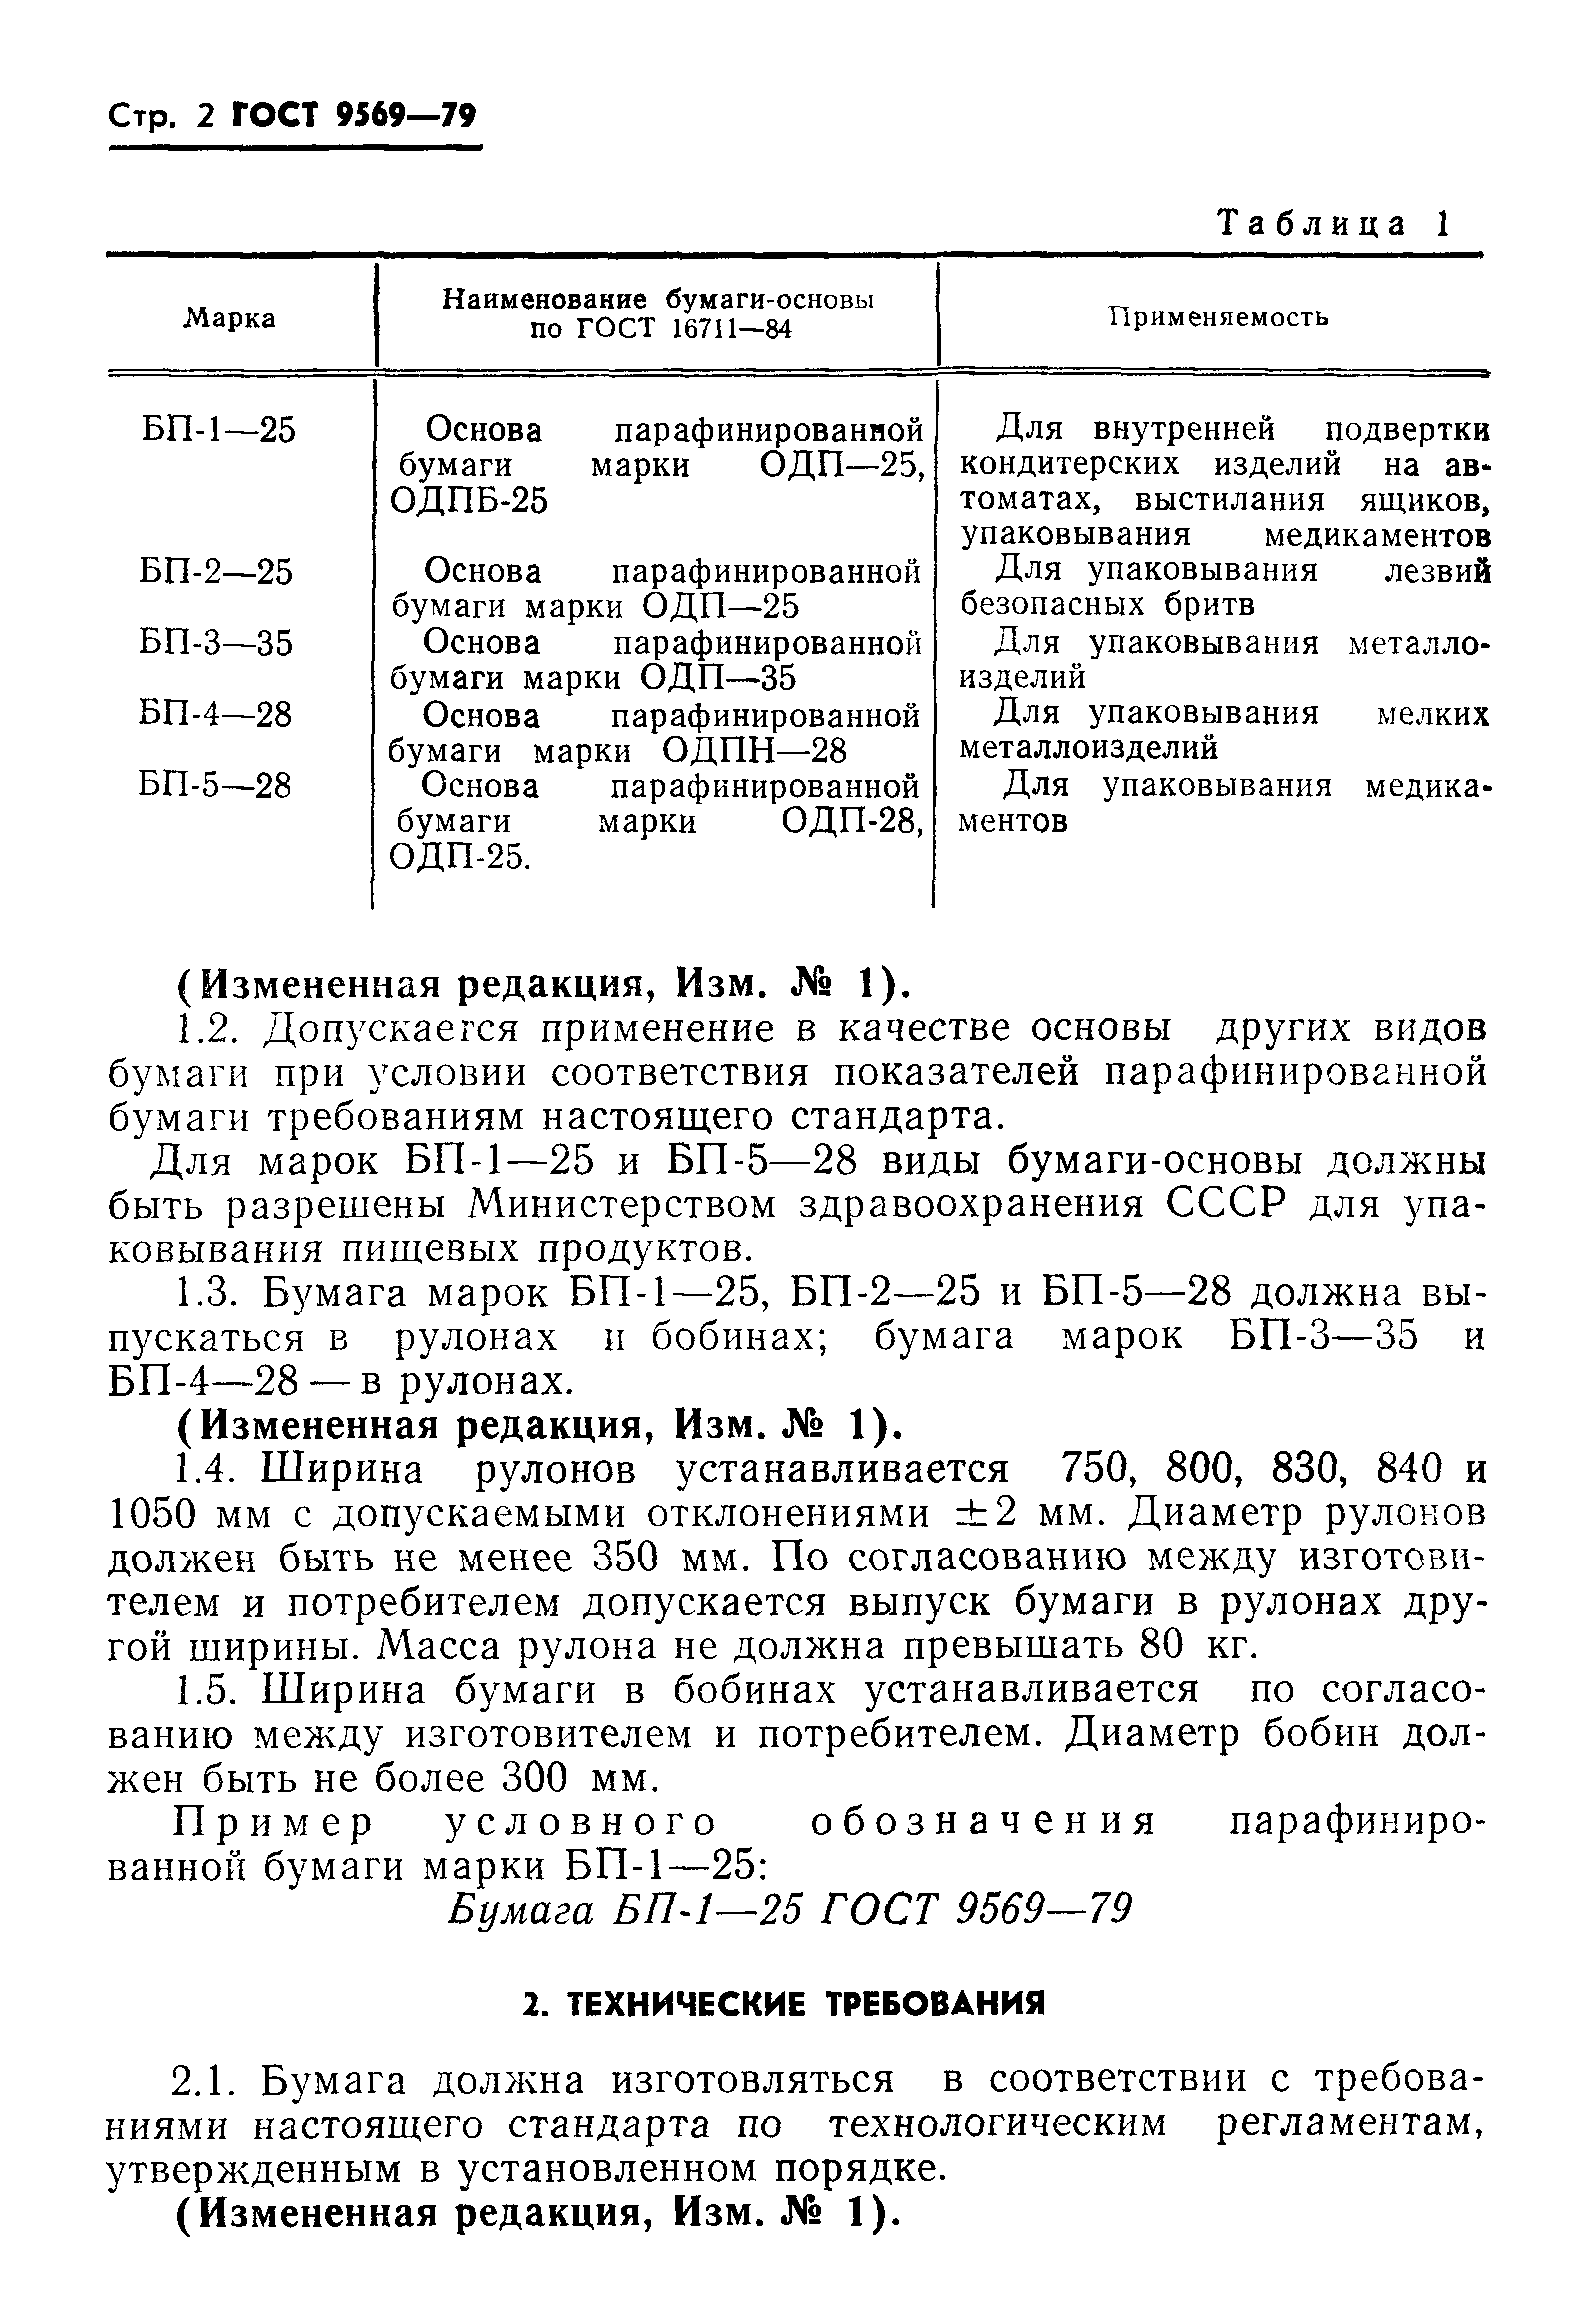 ГОСТ 9569-79